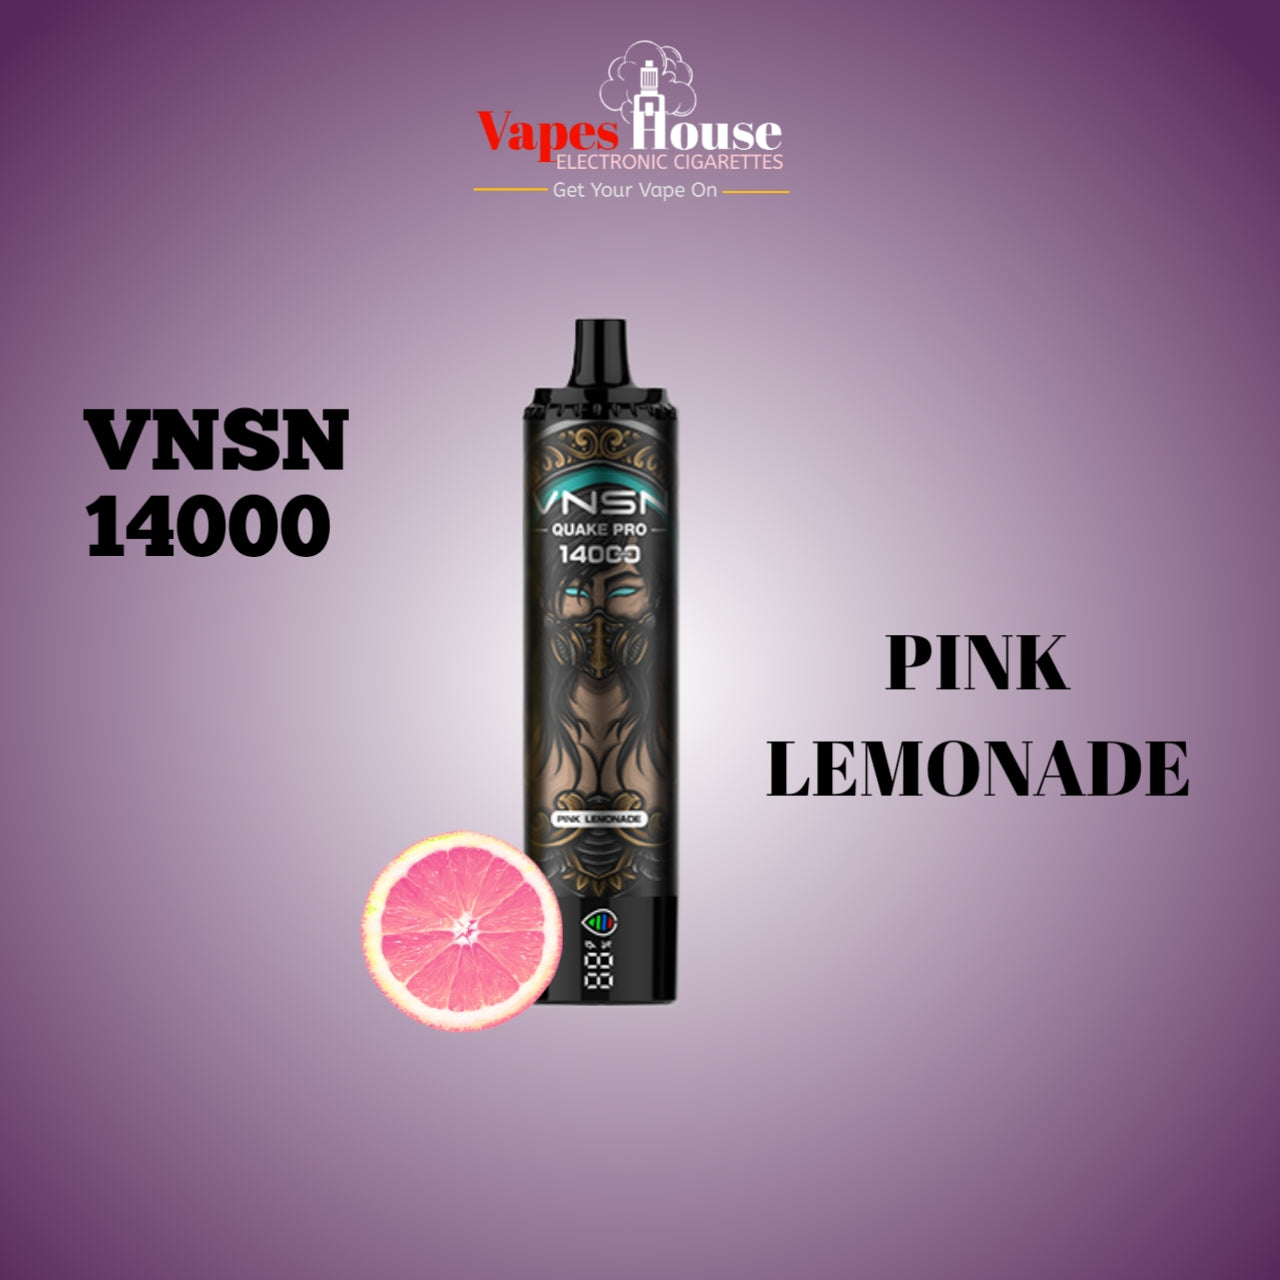 VNSN Quake Pro 14000 Puffs Pink Lemonade Disposable vape